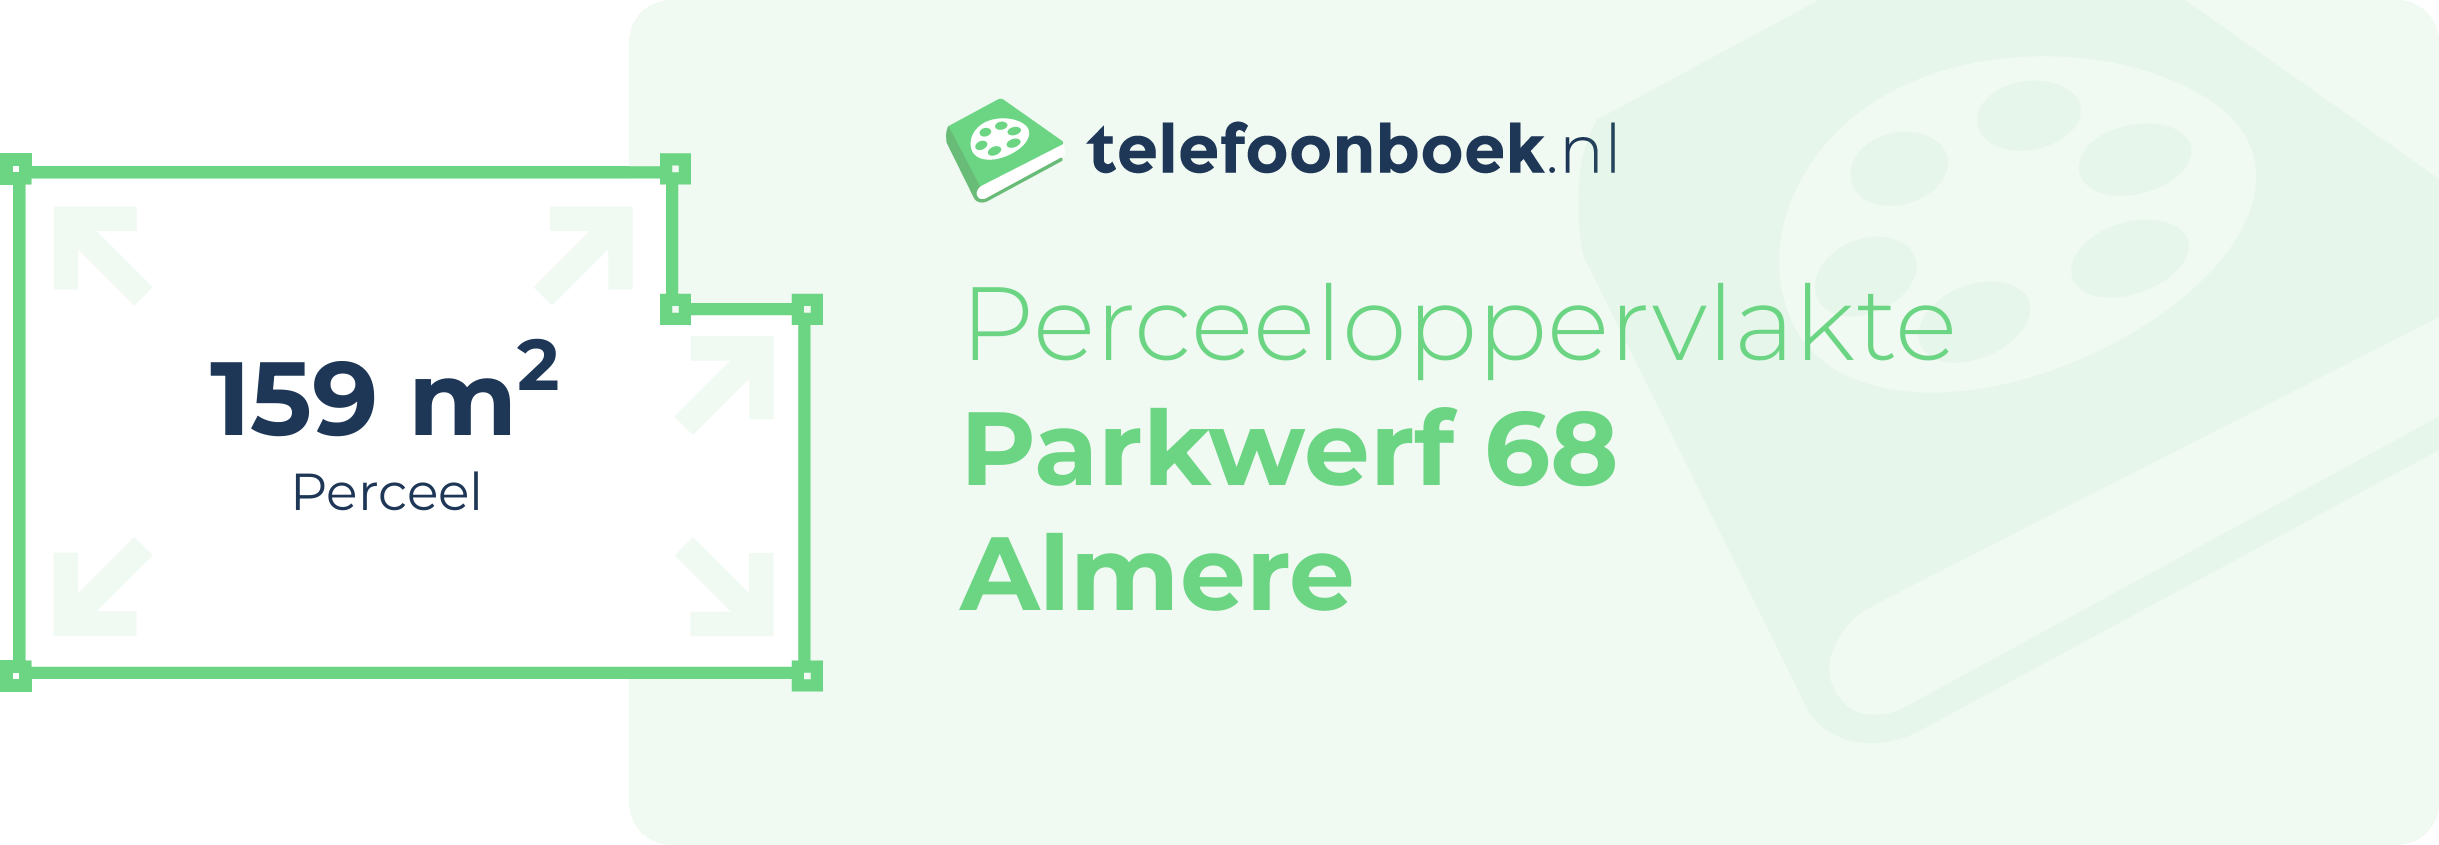 Perceeloppervlakte Parkwerf 68 Almere